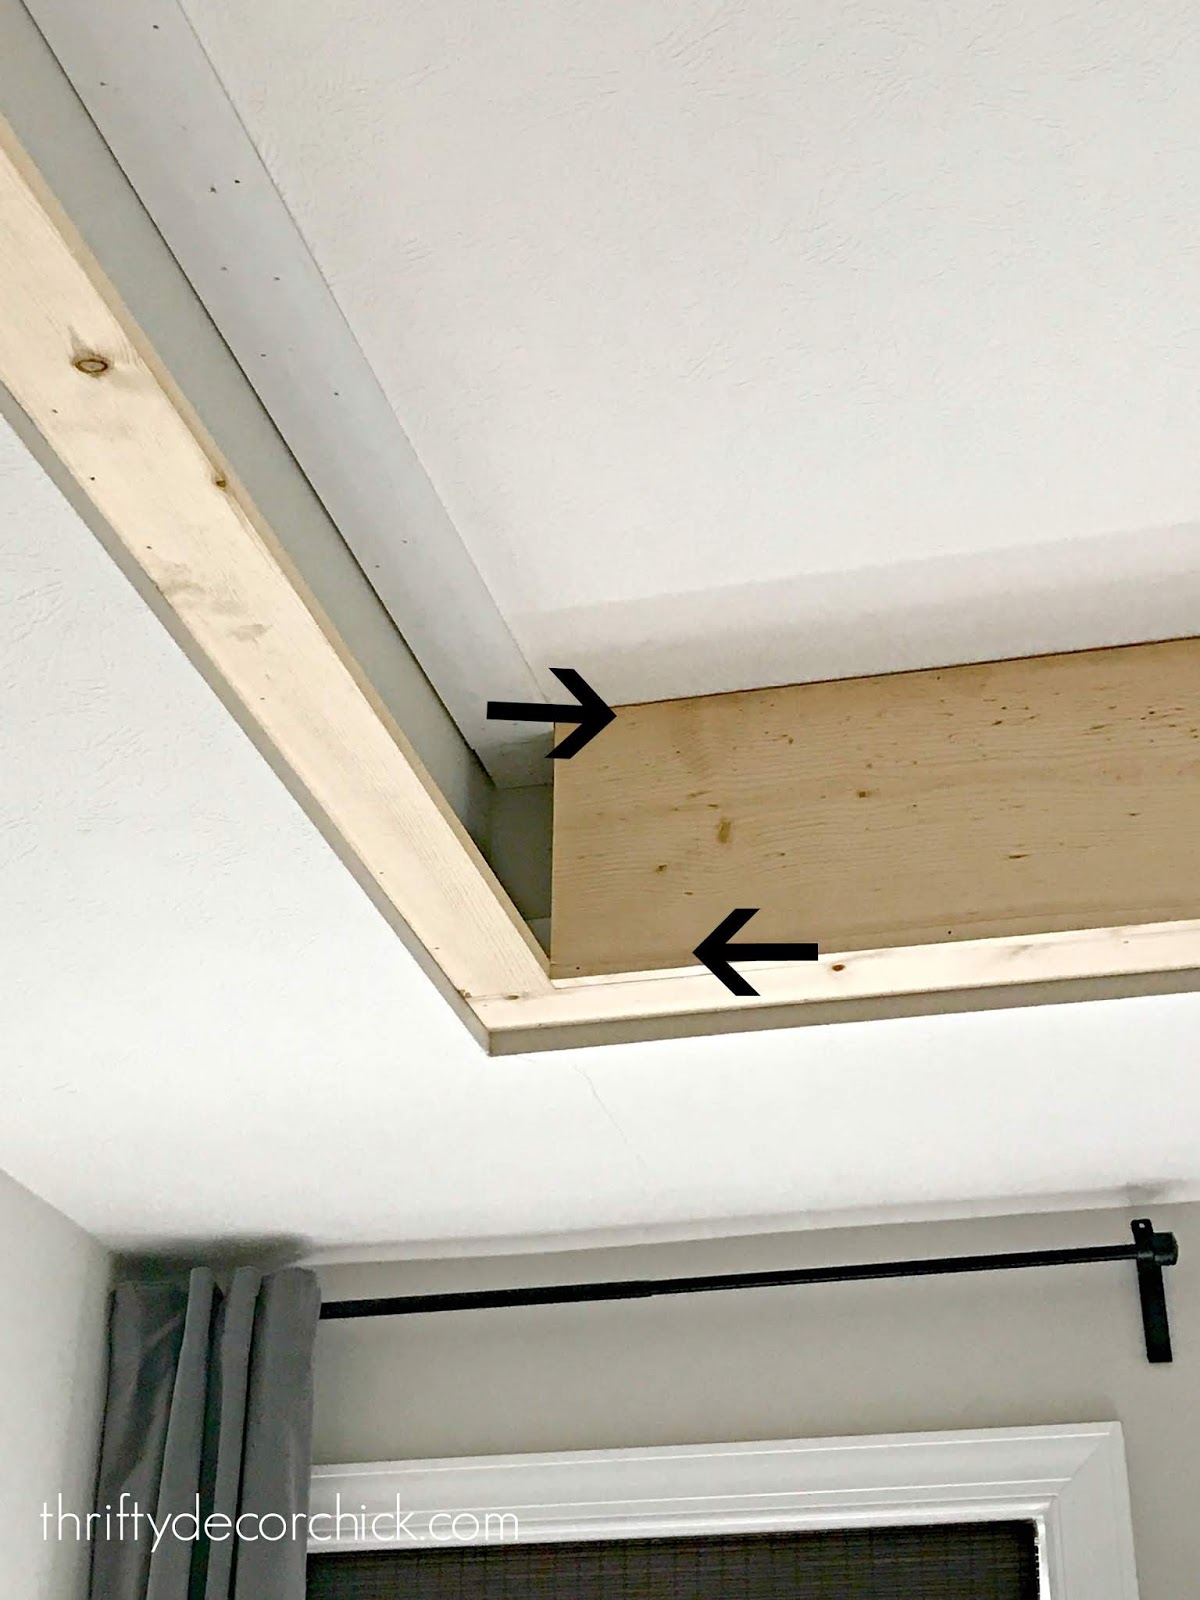 Building "faux" wood beams